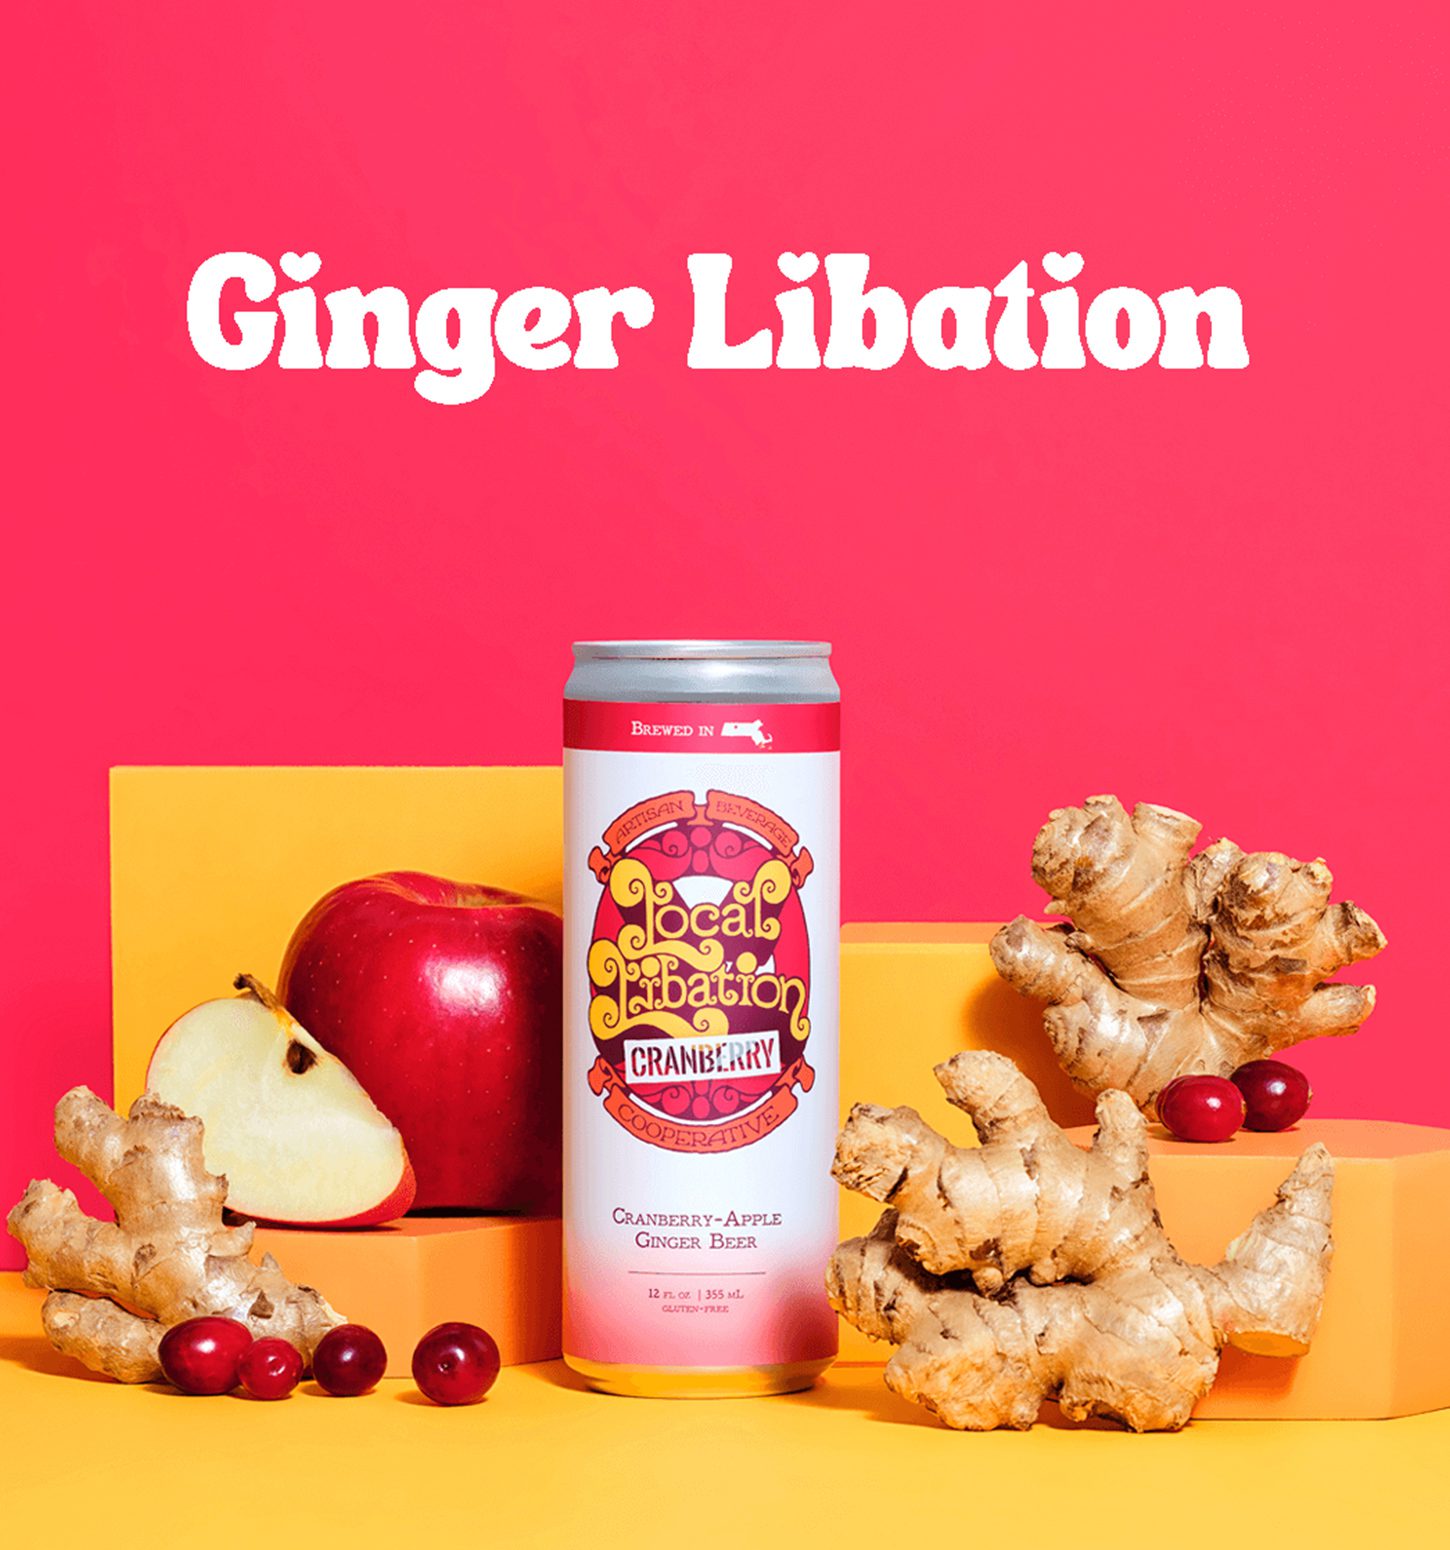 ad for Ginger Libation